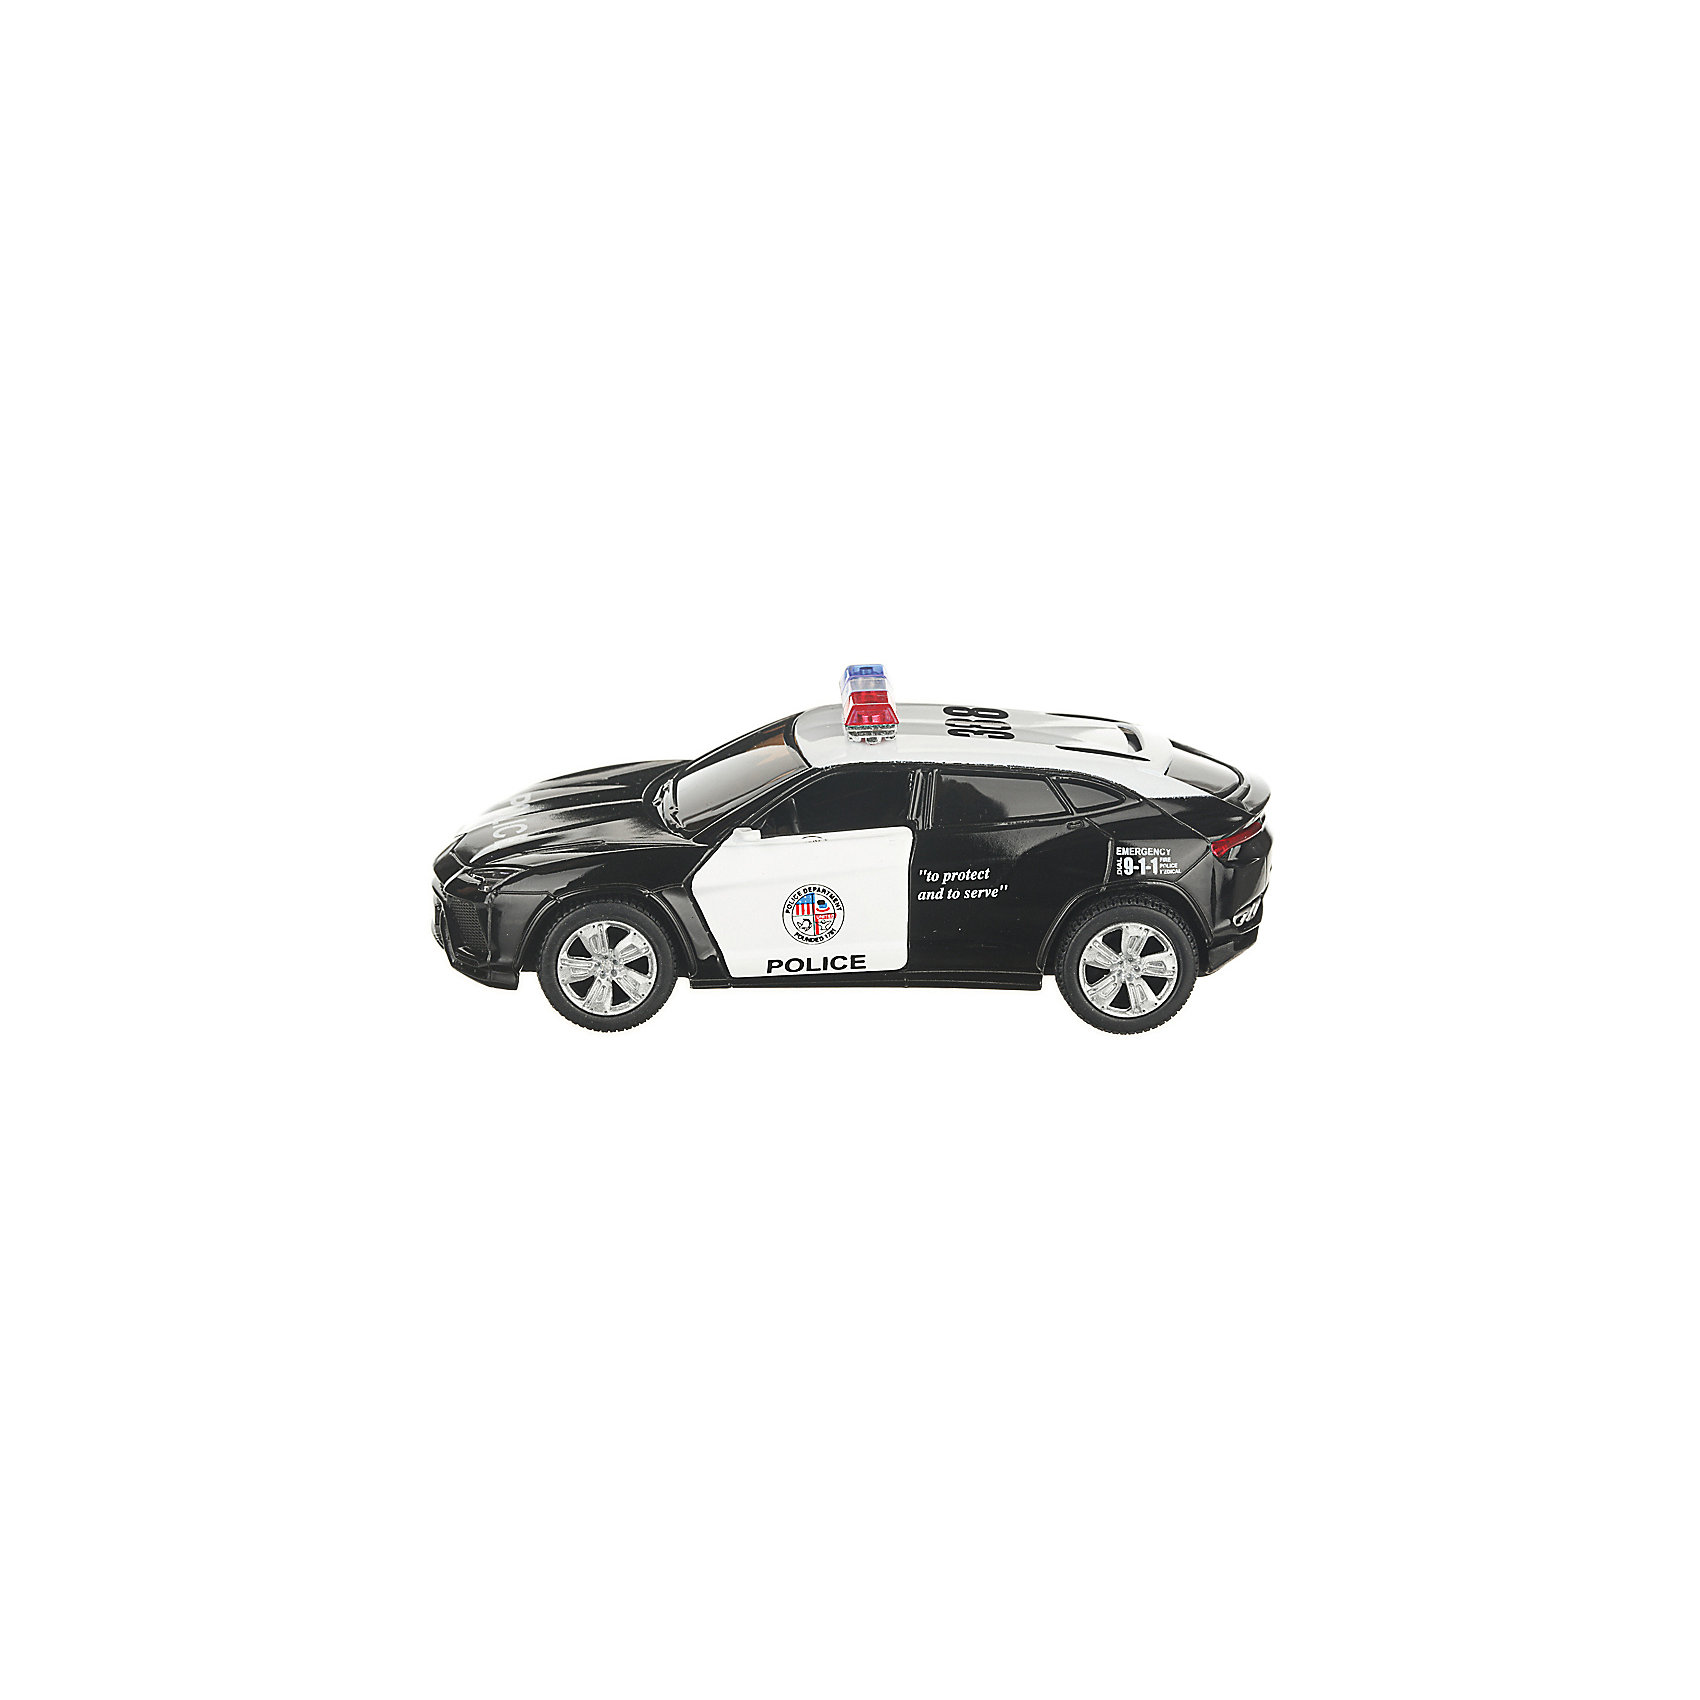 фото Коллекционная машинка Serinity Toys Lamborghin Urus Полиция, чёрно-белая